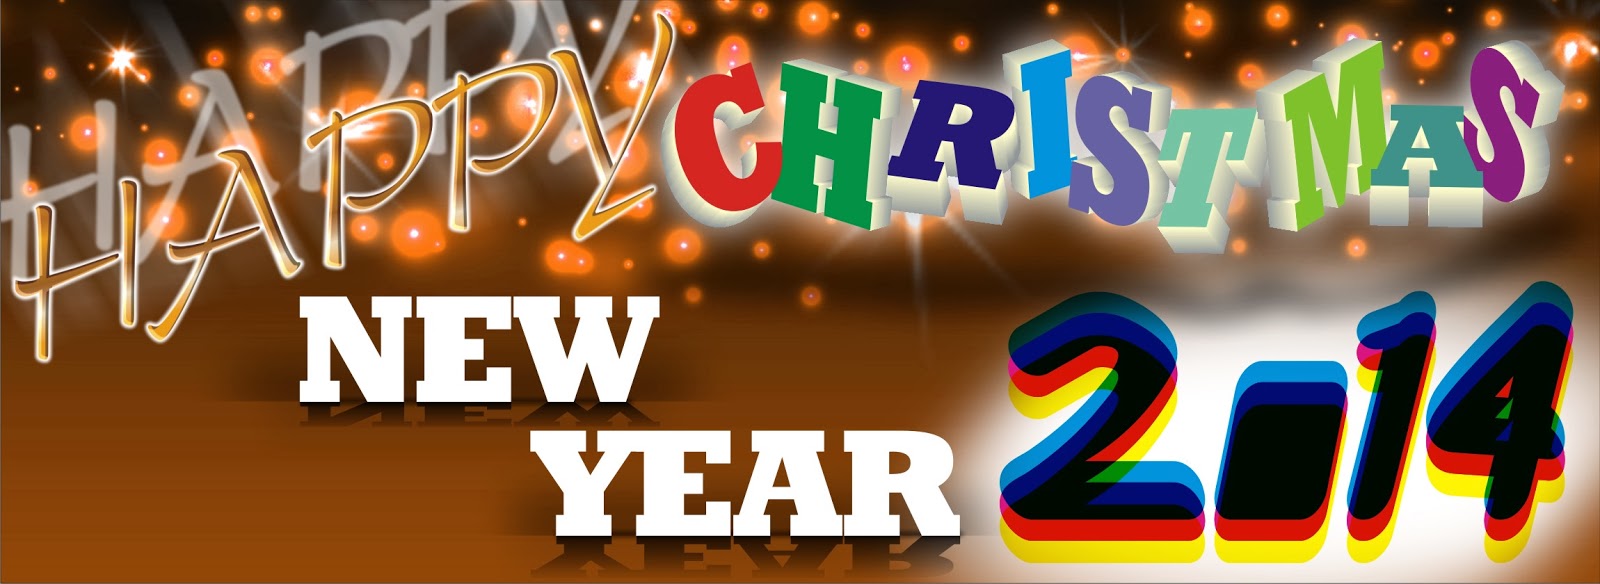 happy new year 2014 banner clip art - photo #40